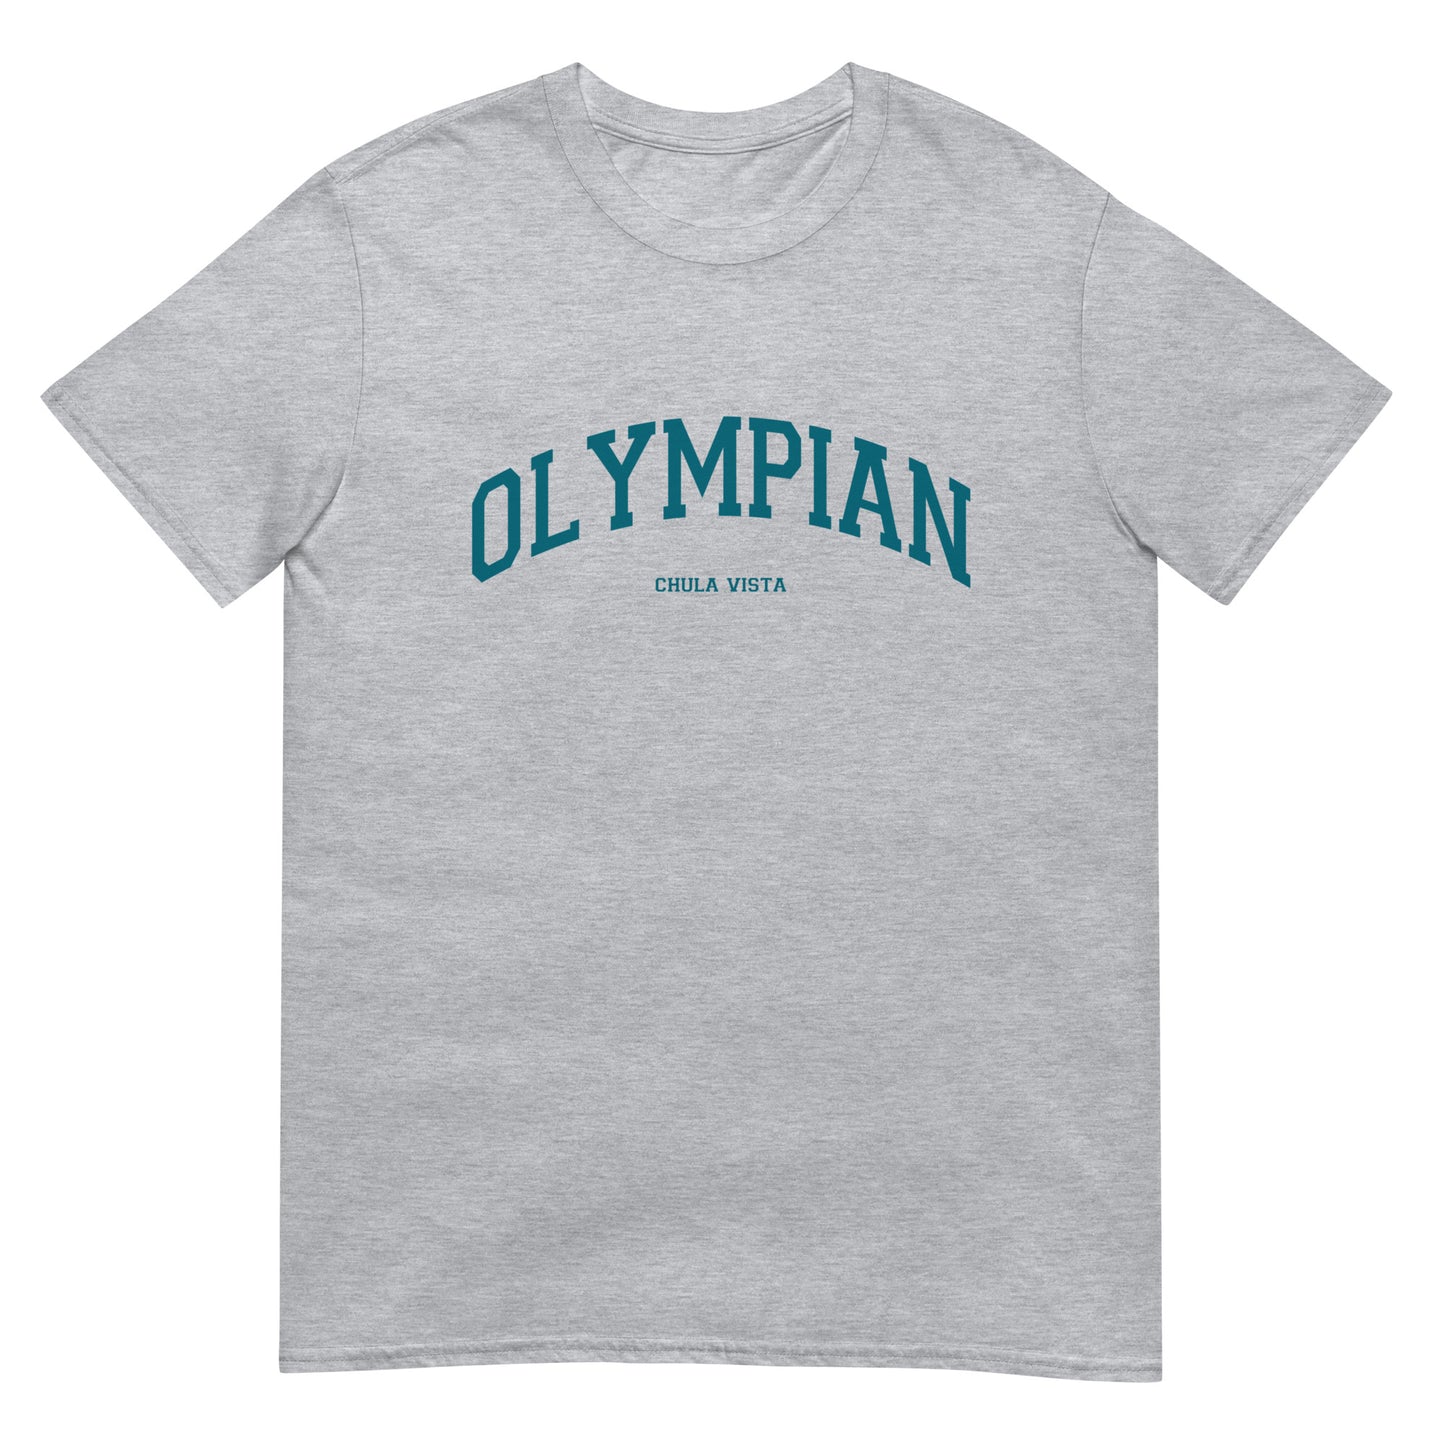 Olympian Short-Sleeve Unisex T-Shirt